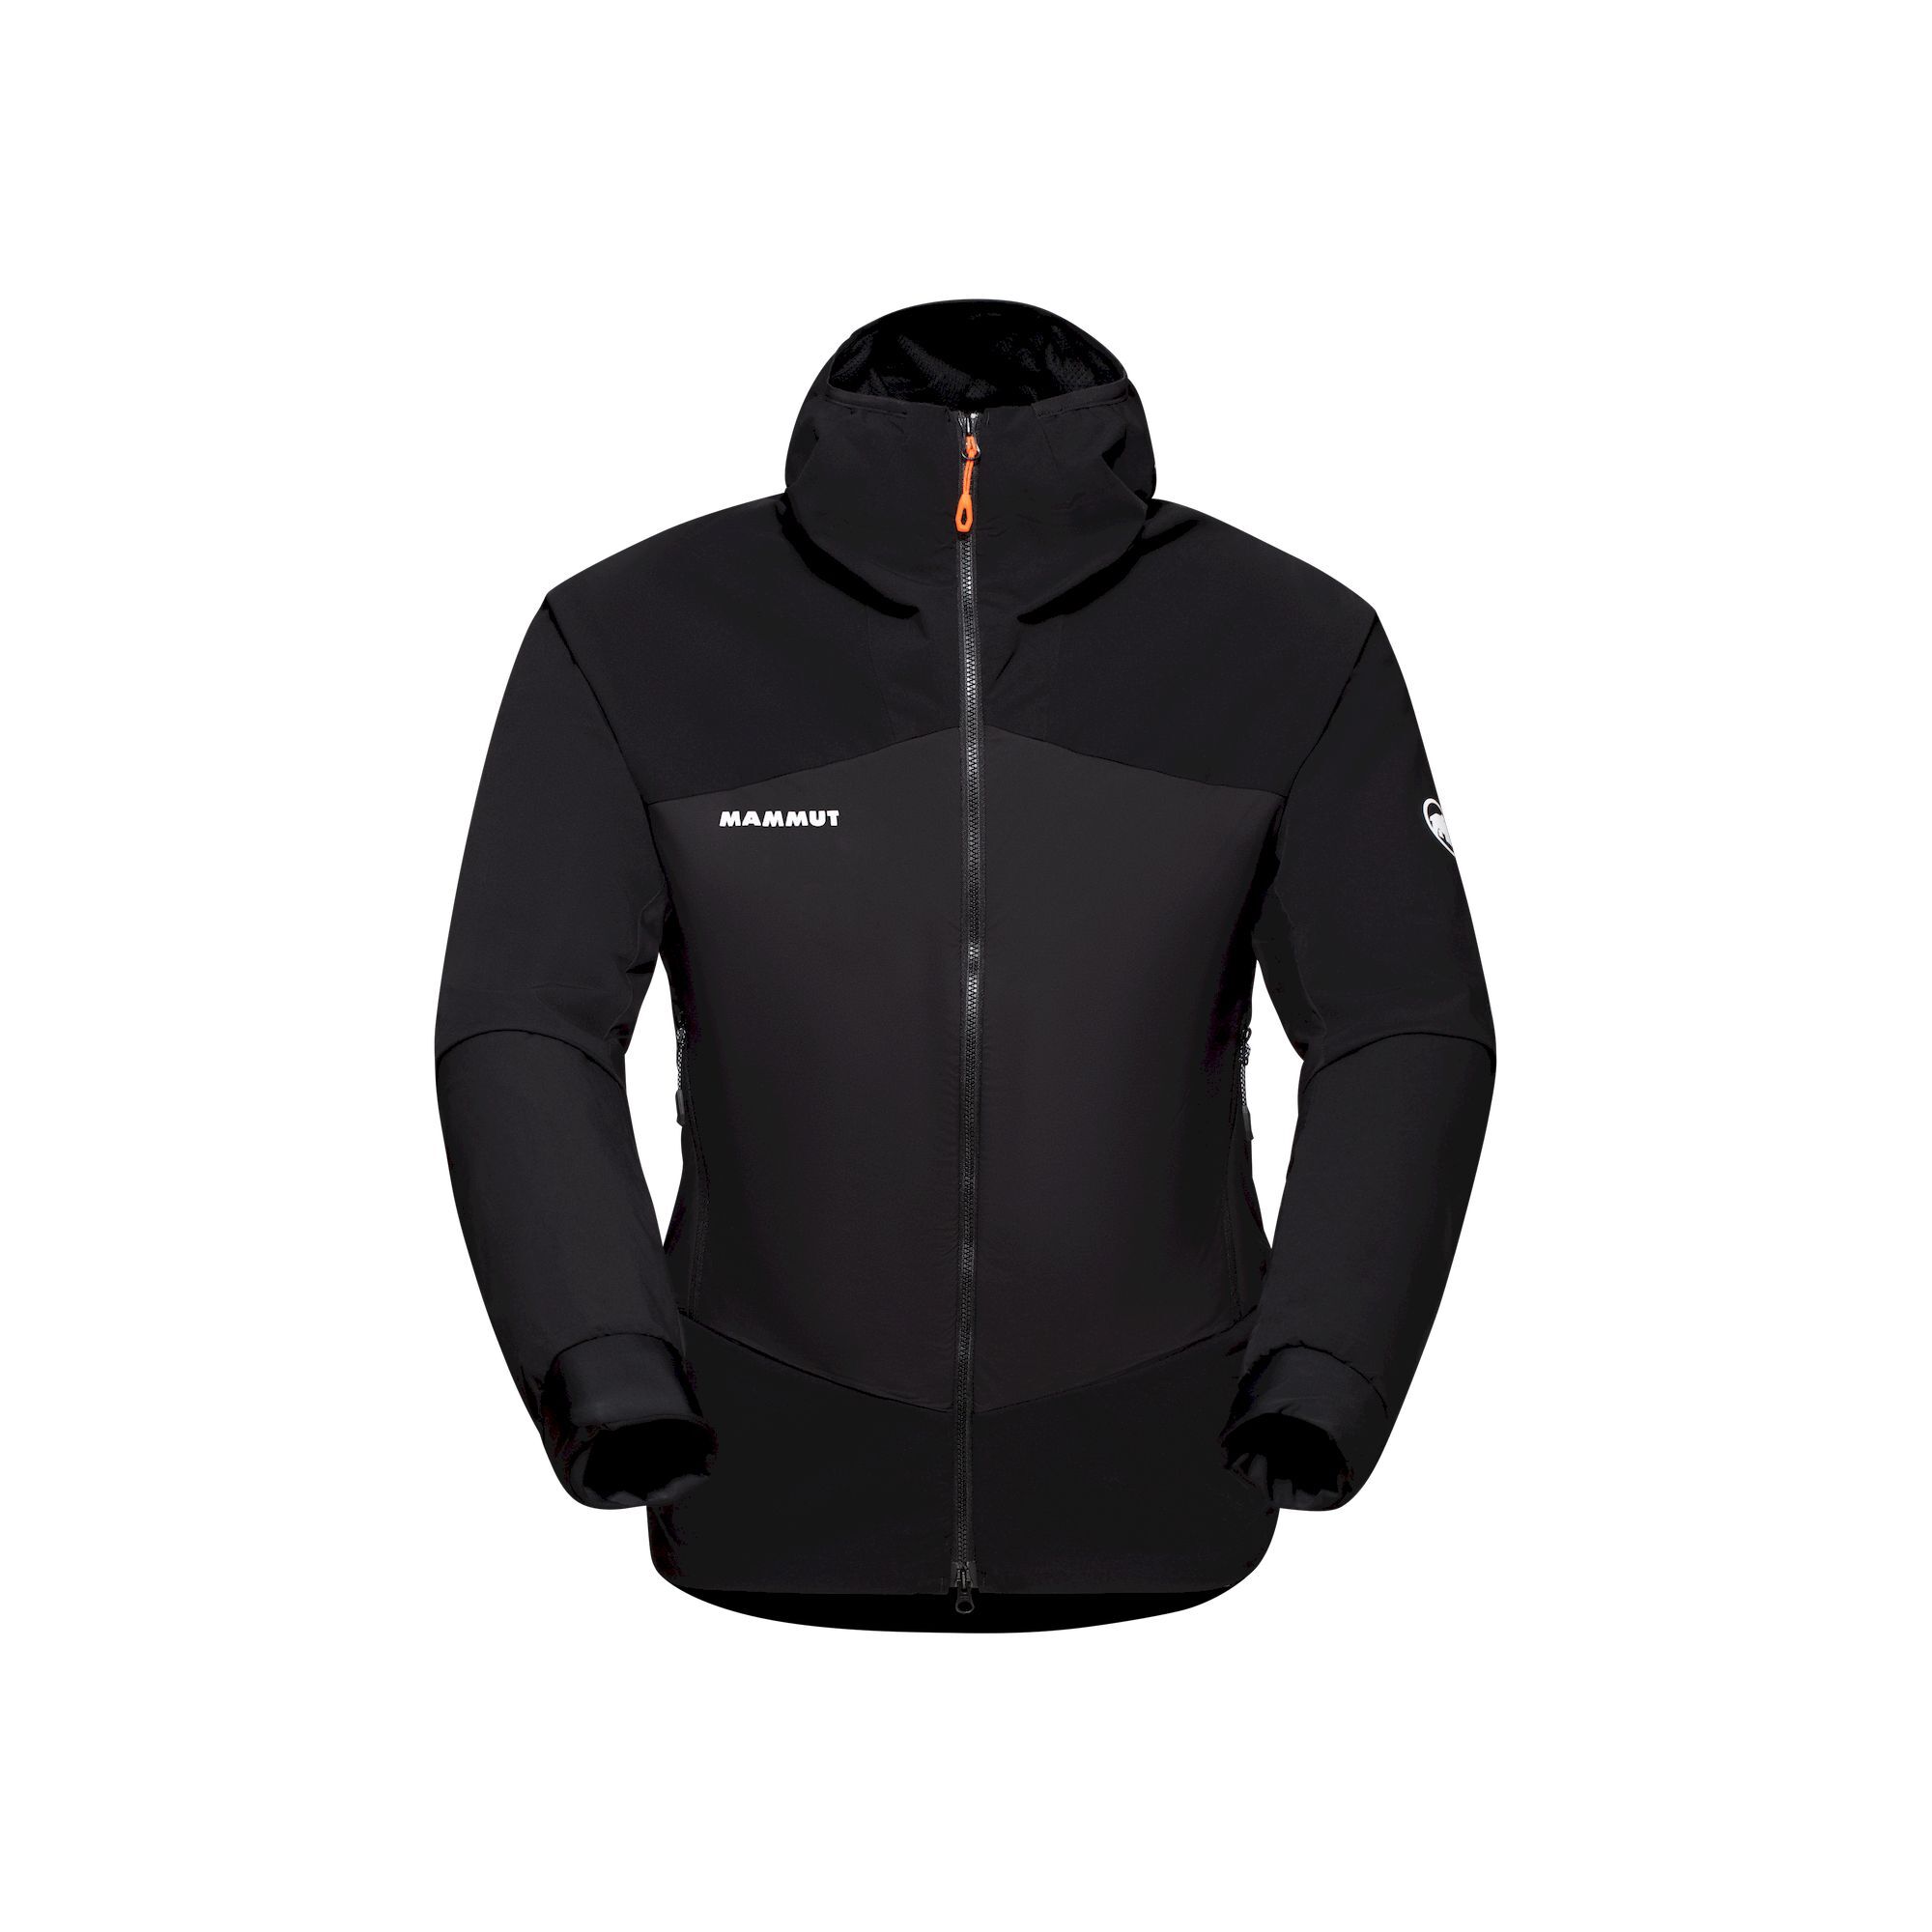 Taiss IN Hybrid Hooded Jacket - Waterproof jacket - Men's